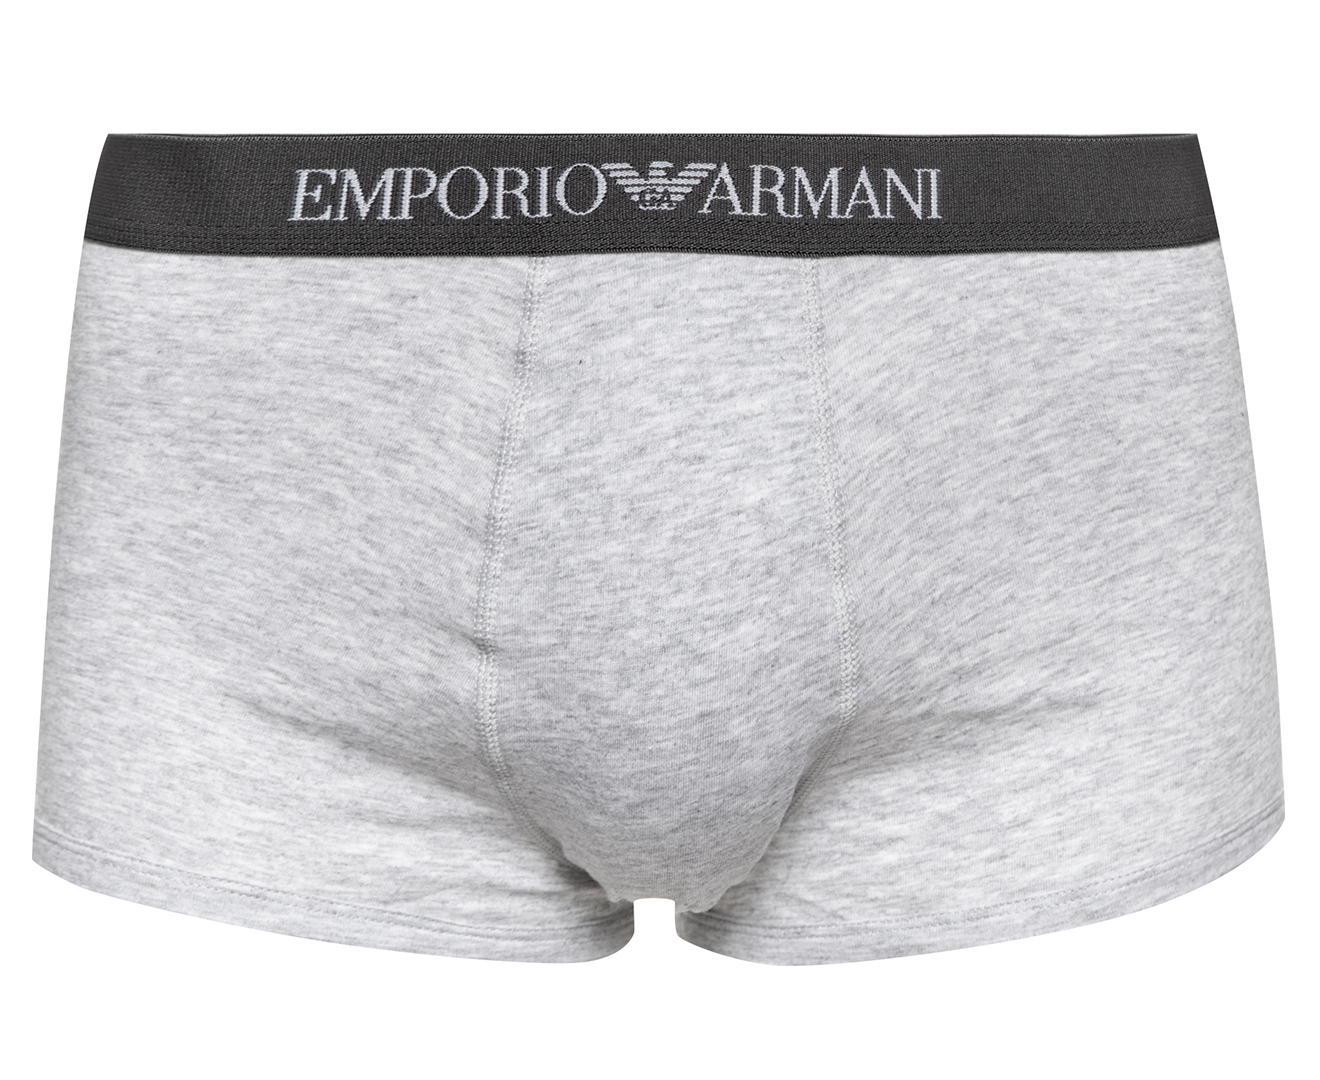 Emporio Armani Men's Pure Cotton Trunks 3-Pack - Grey/Black/Navy ...